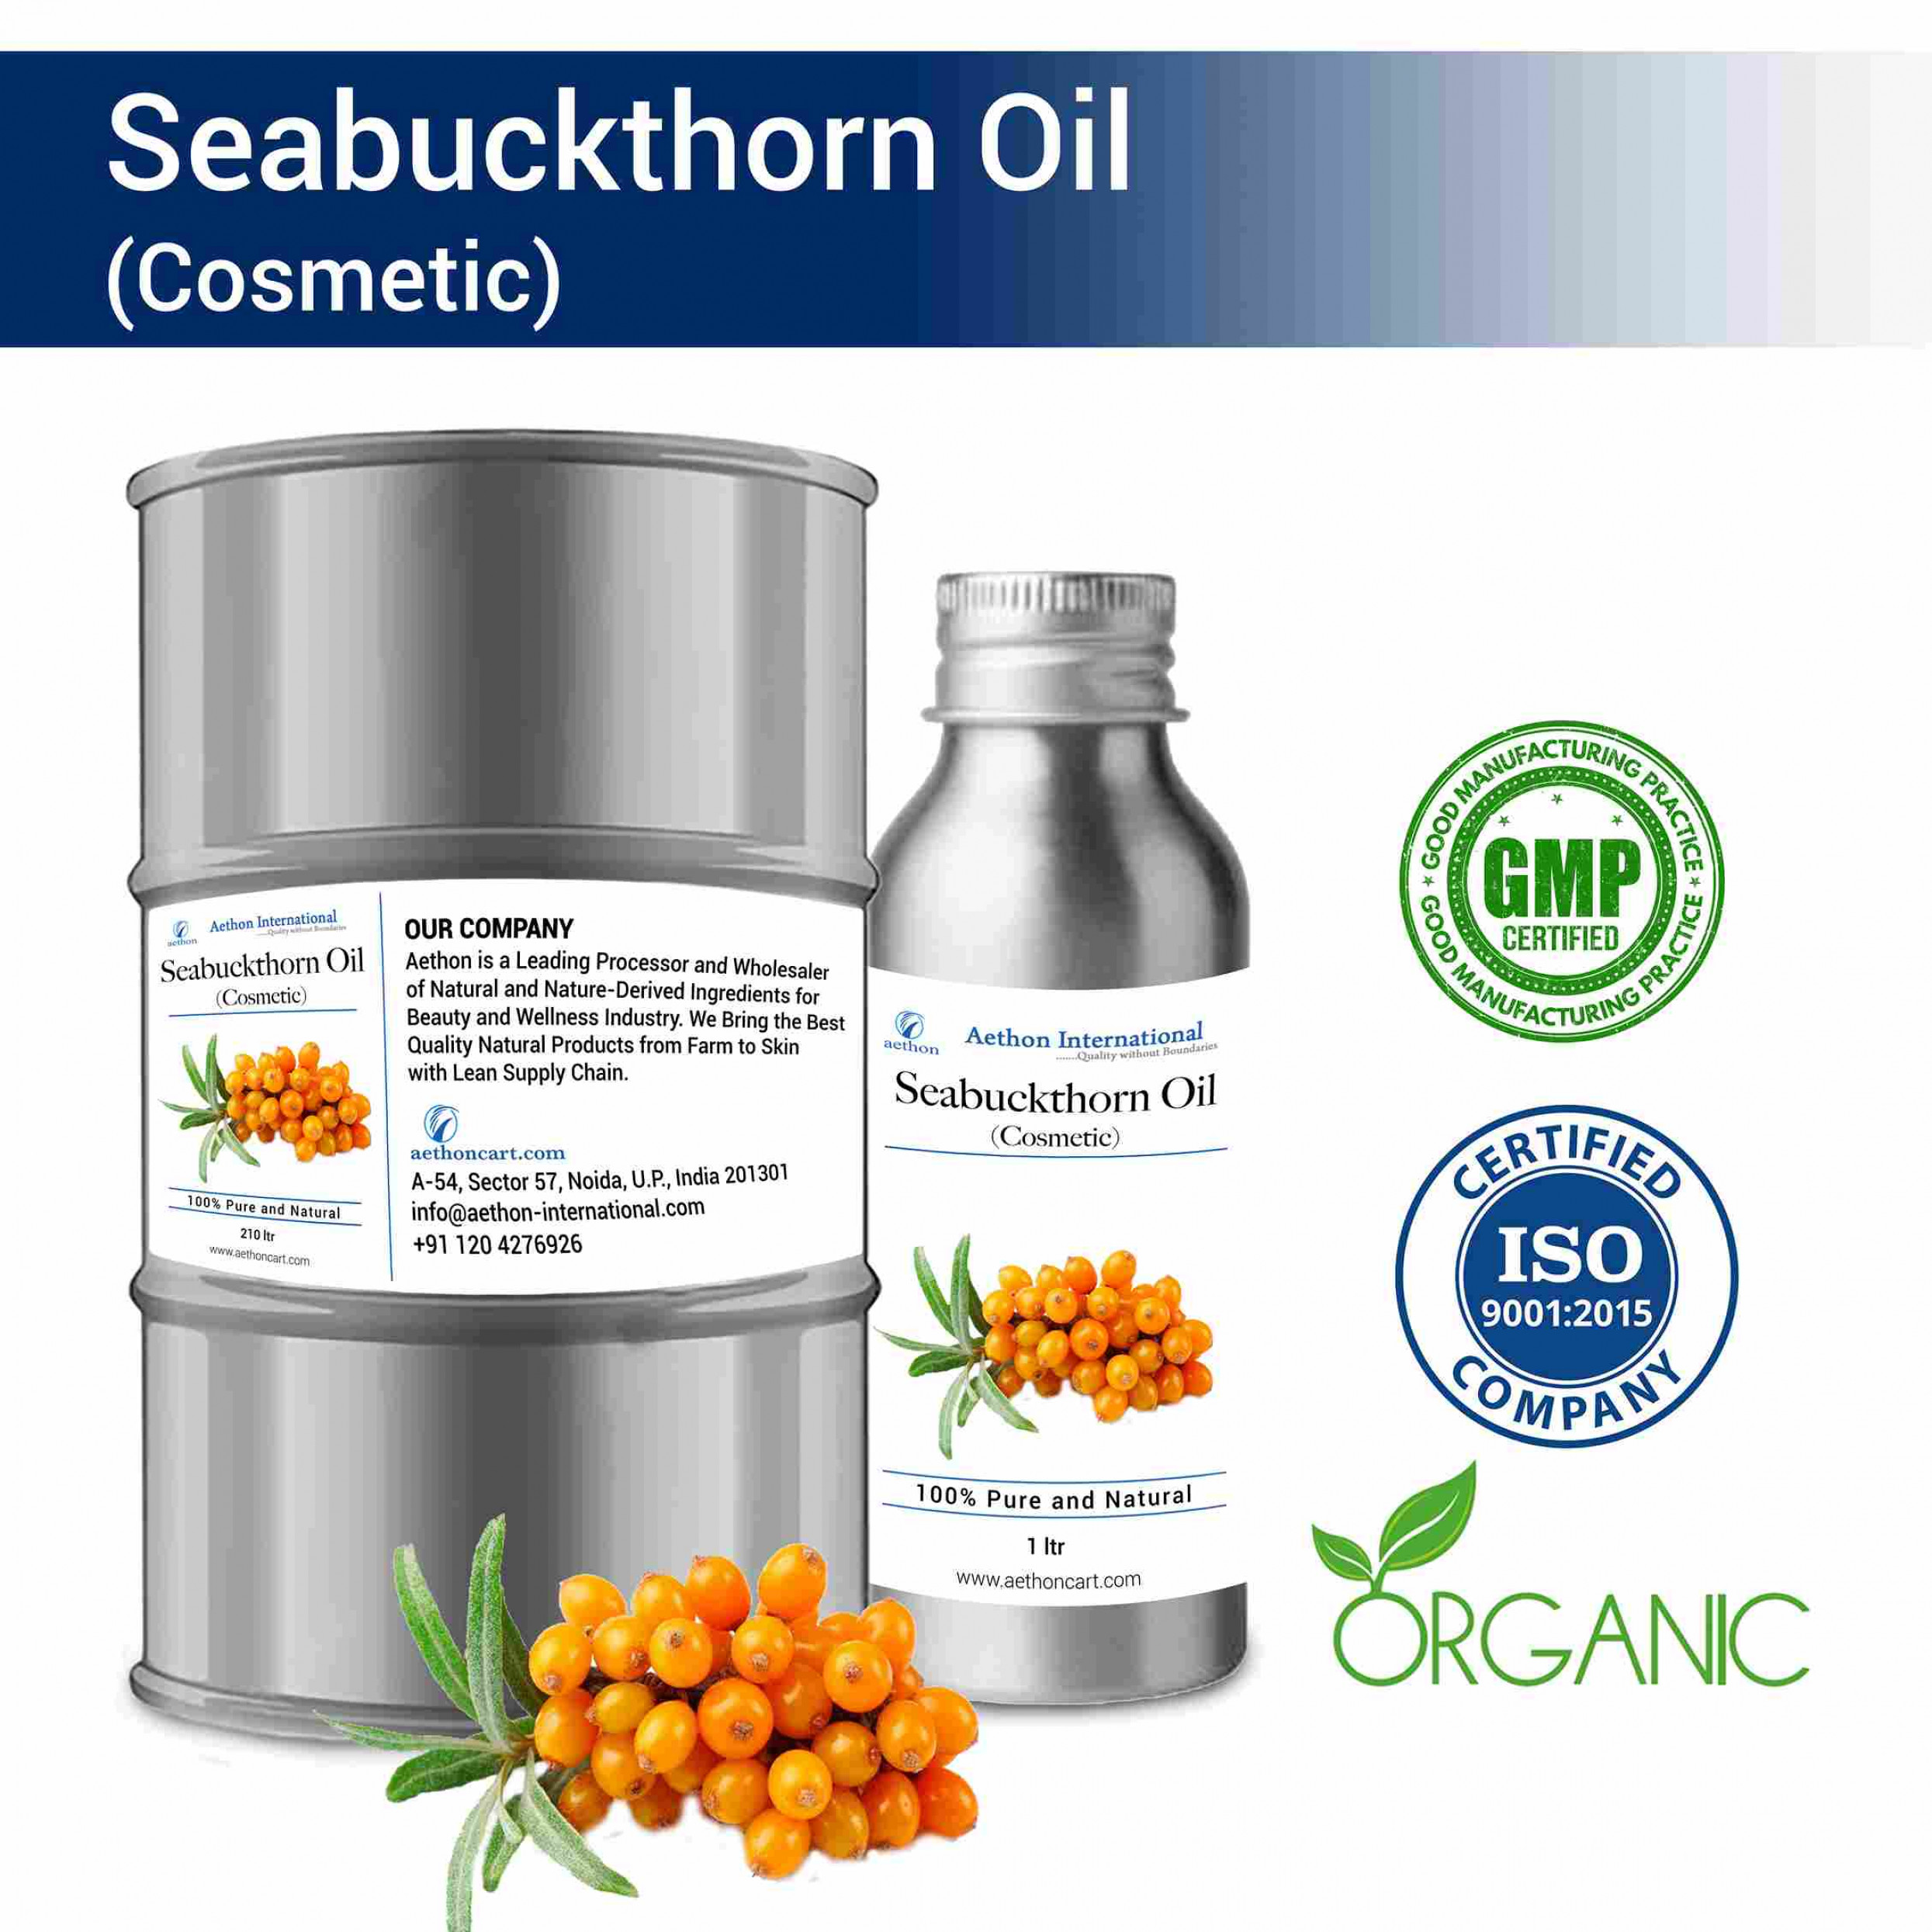 Seabuckthorn Oil (Cosmetic)